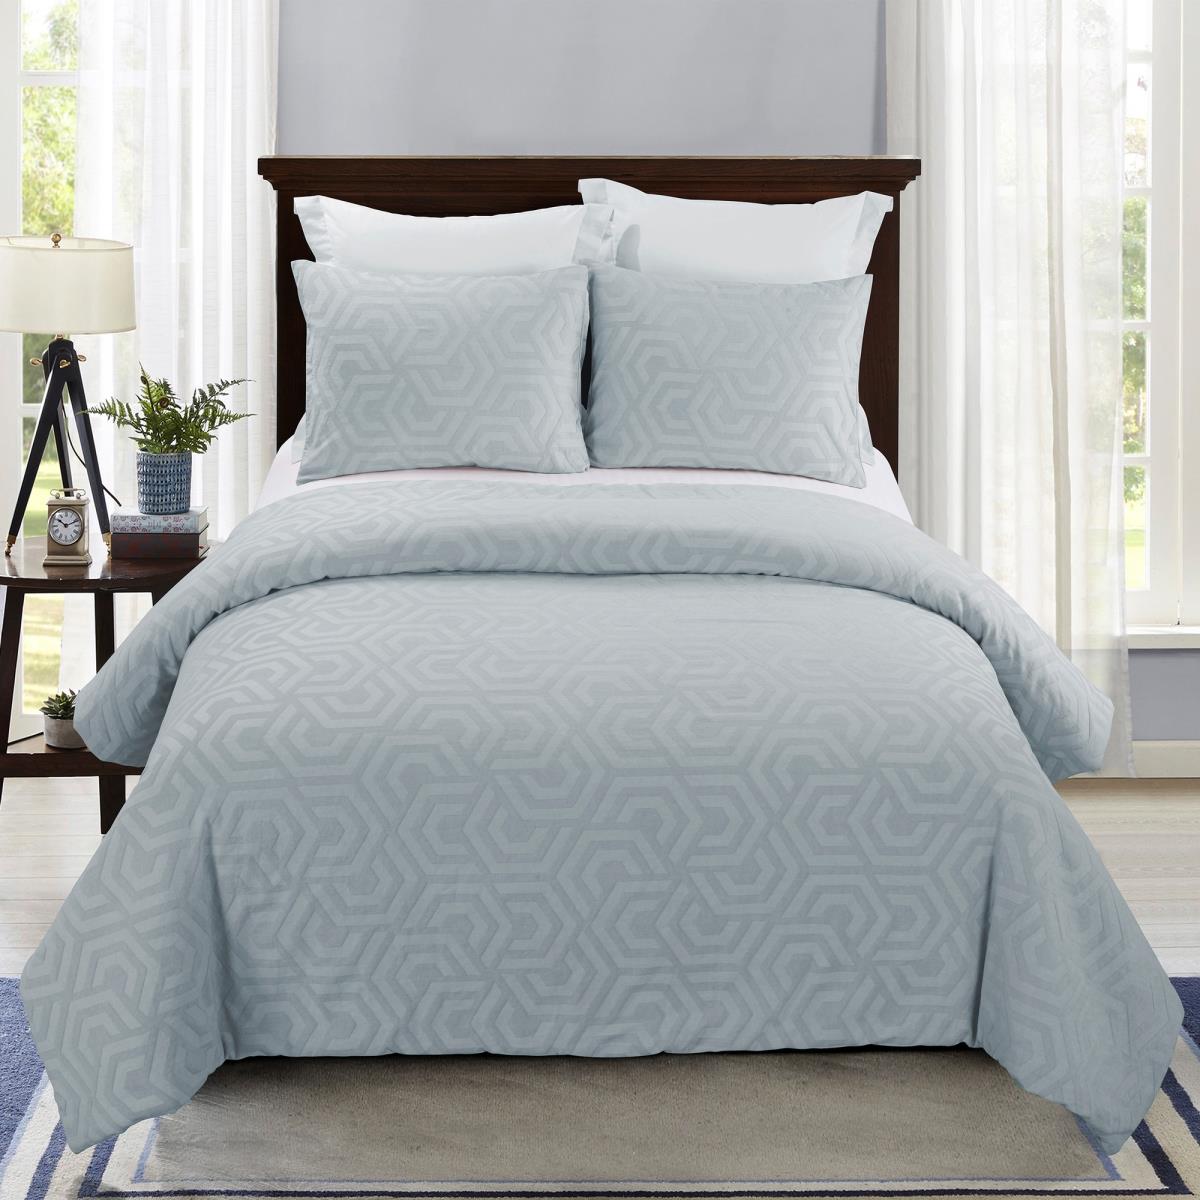 Y00716 Queen Size Comforter Set - Seville Soft Blue